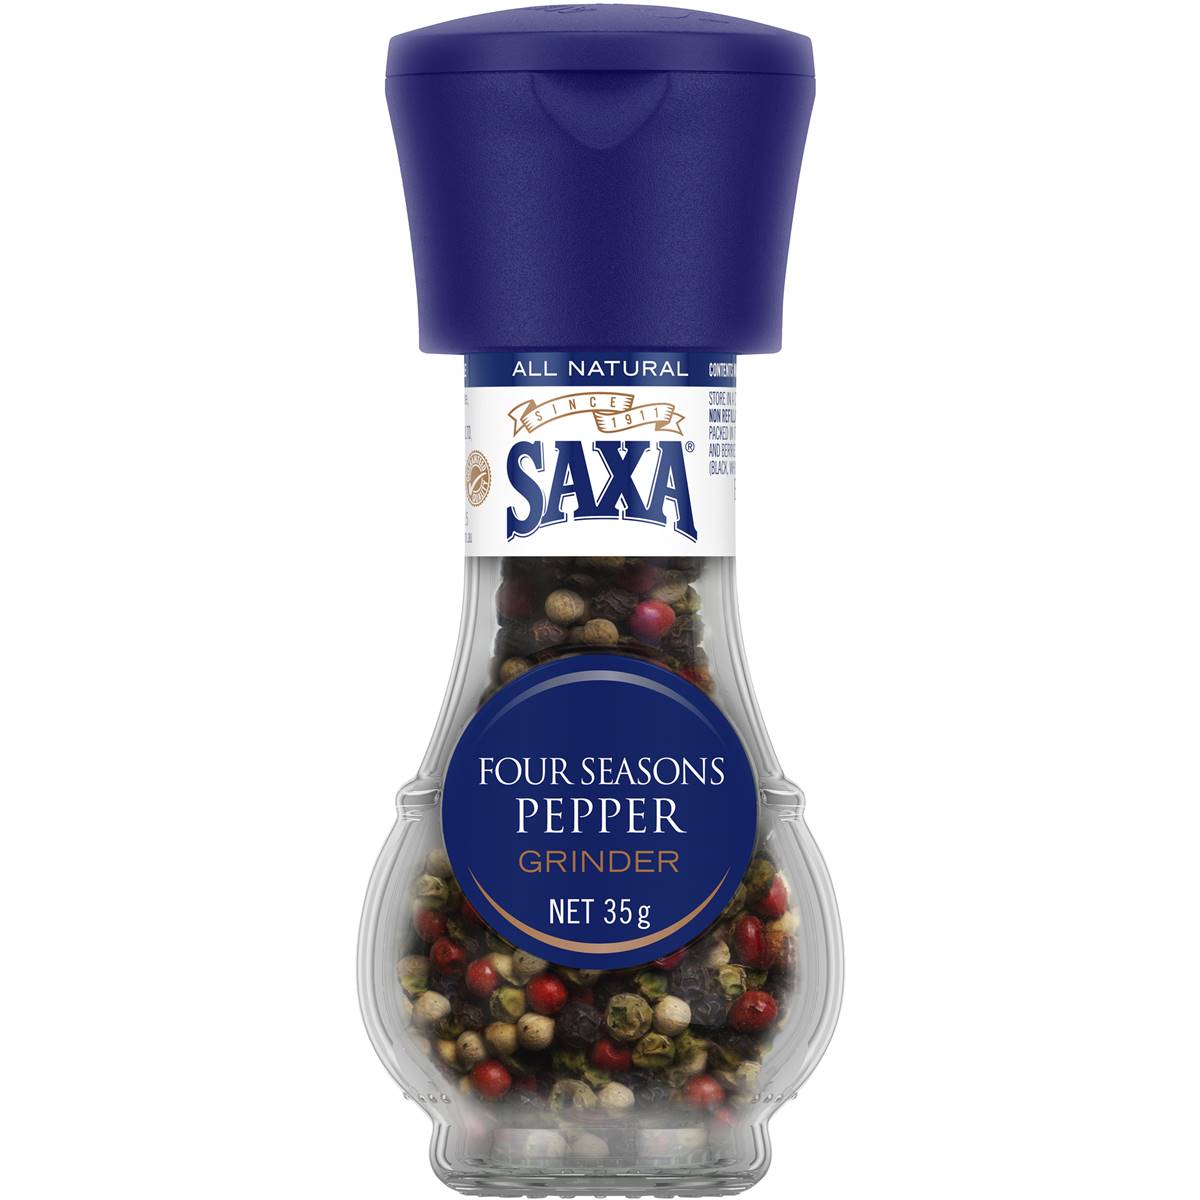 Calories in Saxa Four Seasons Pepper Grinder Four Seasons